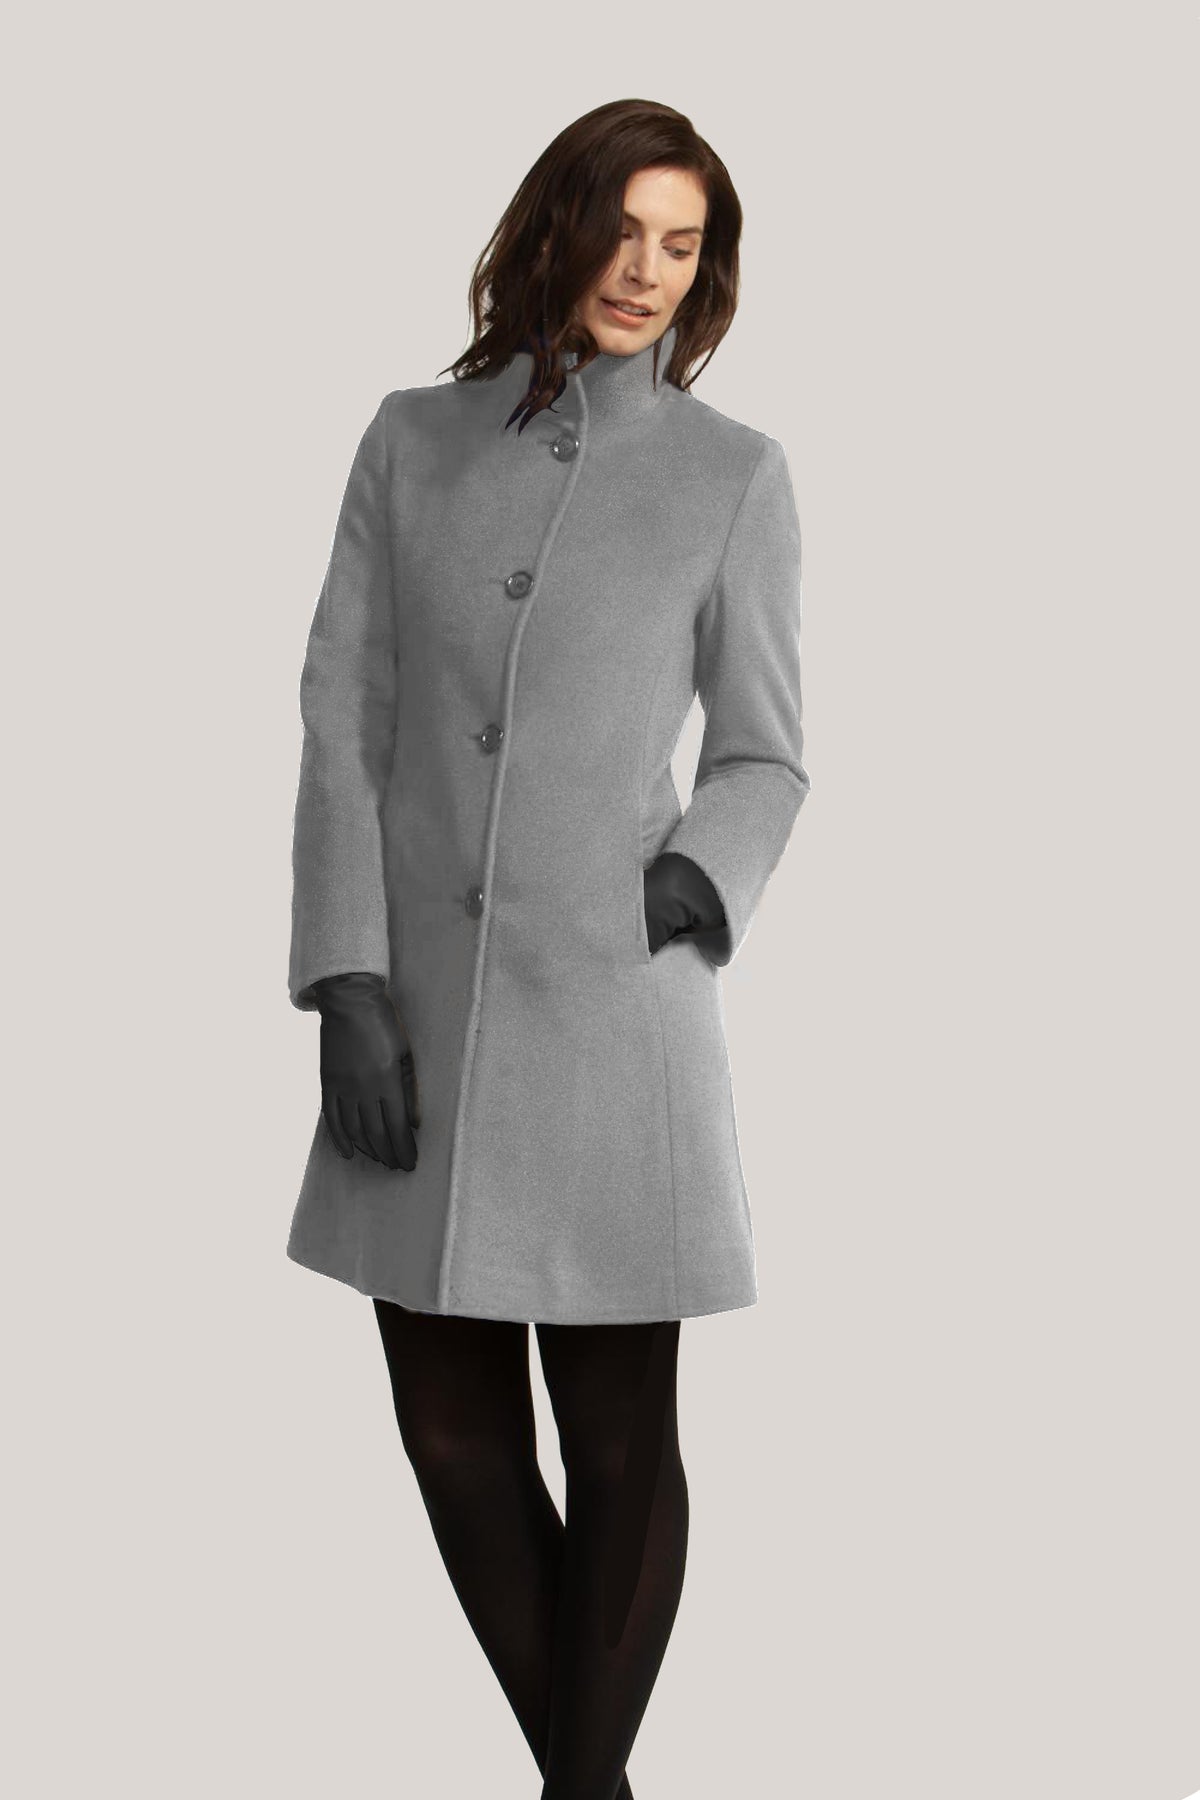 TAYLOR Wool & Cashmere Coat 3957 – LORNE'S COATS